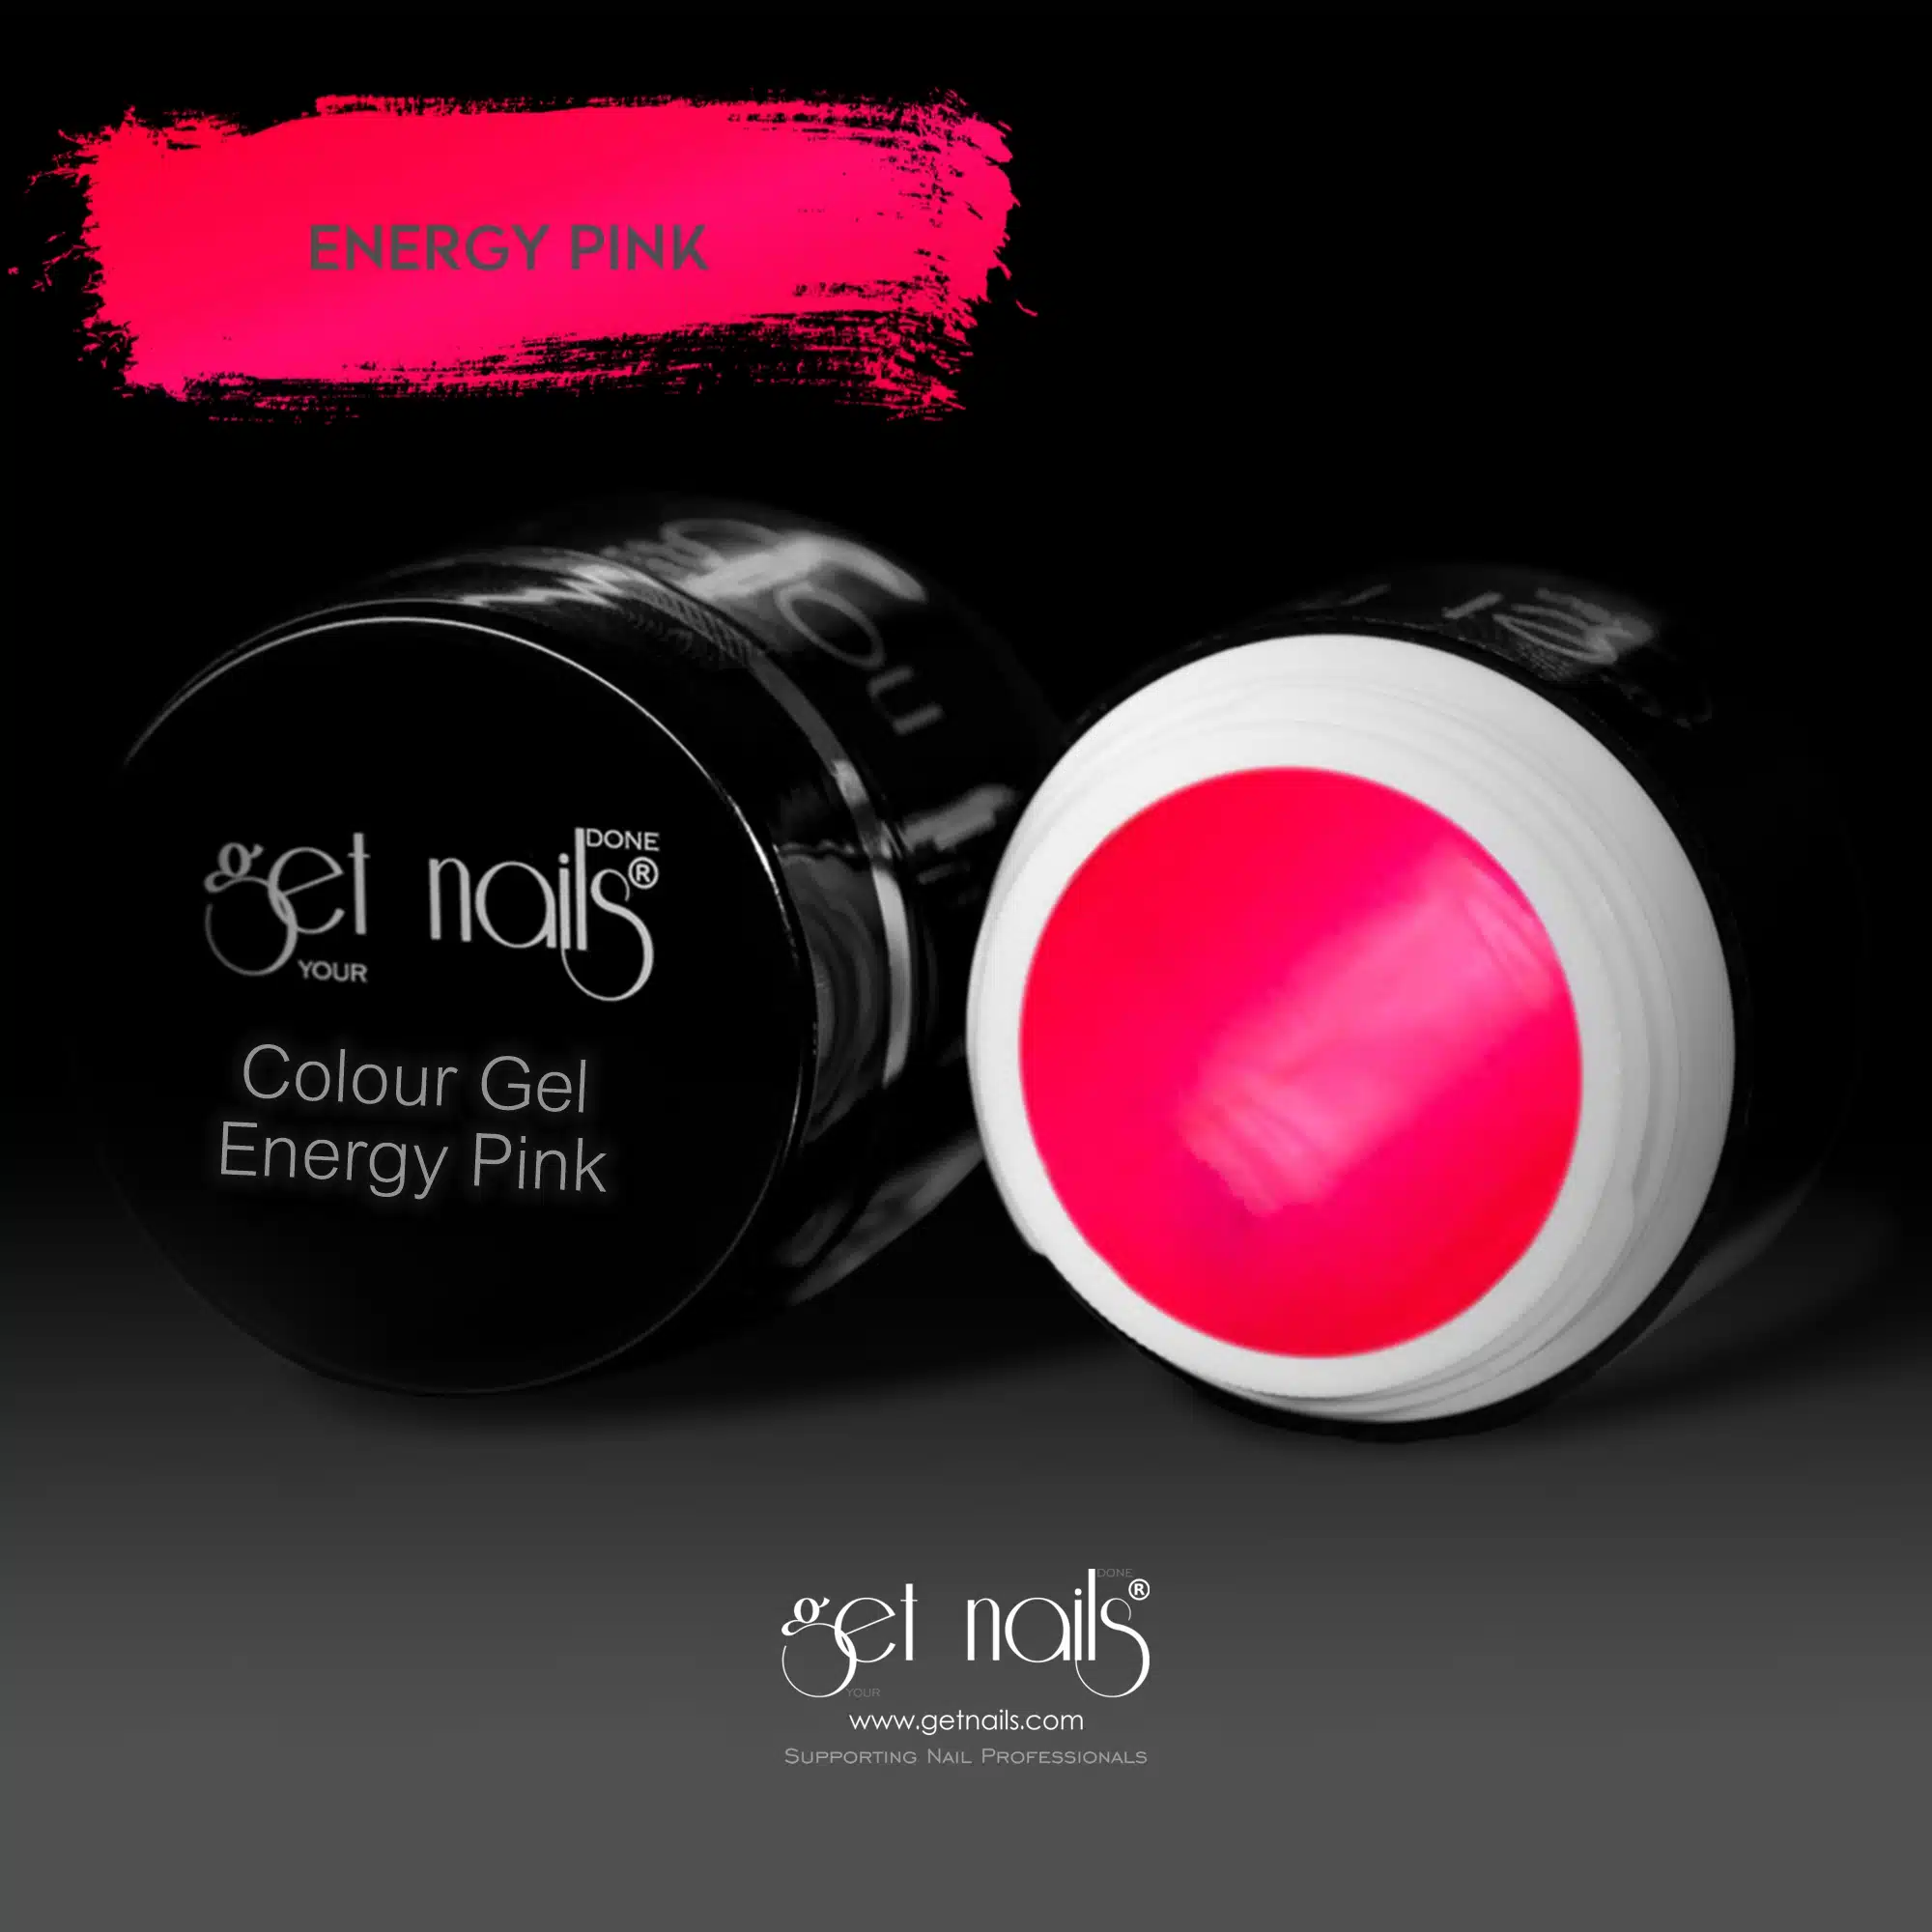 Get Nails Austria - Gel colorato Energy Pink 5g